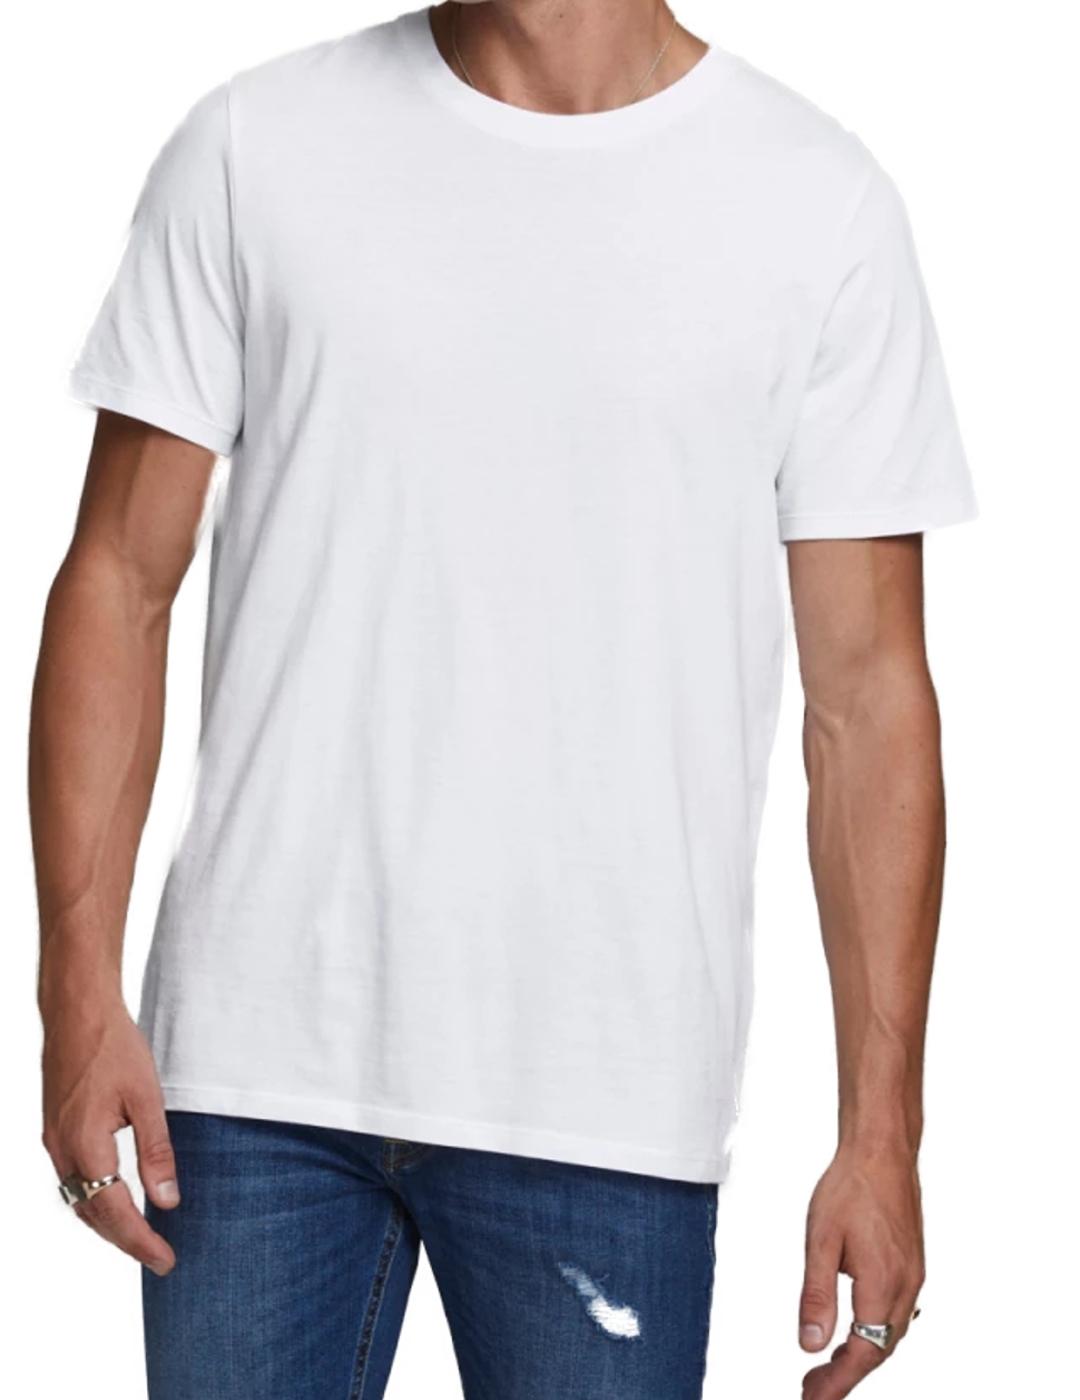 Camiseta Jack&Jones Organic blanca manga corta de hombre